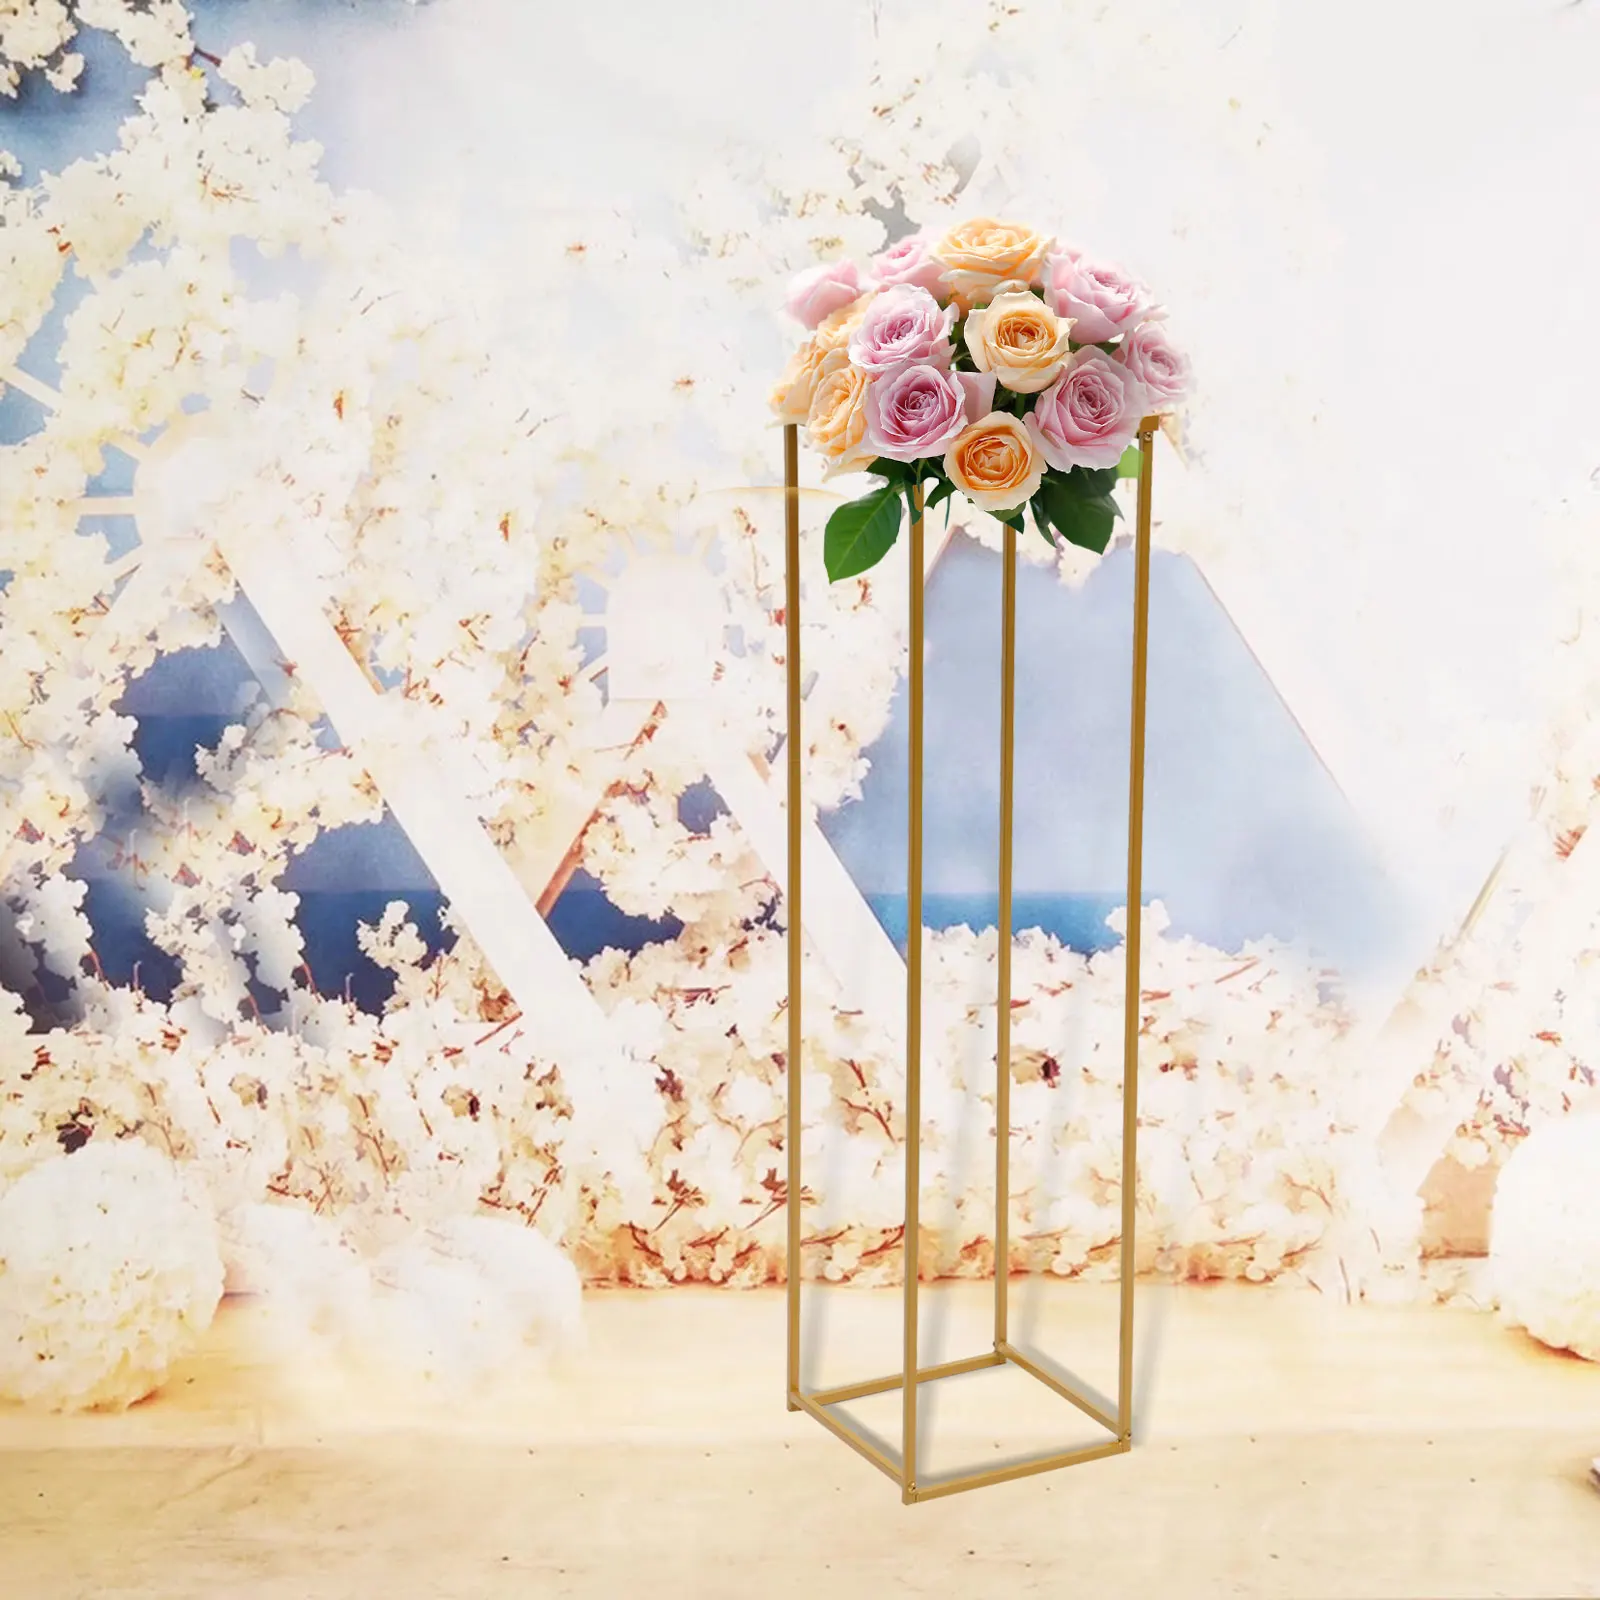 

Golden Metal 100cm Geometric Column Flower Stand Rack Vases Decor Frame DLY Stand For Party Gathering Wedding